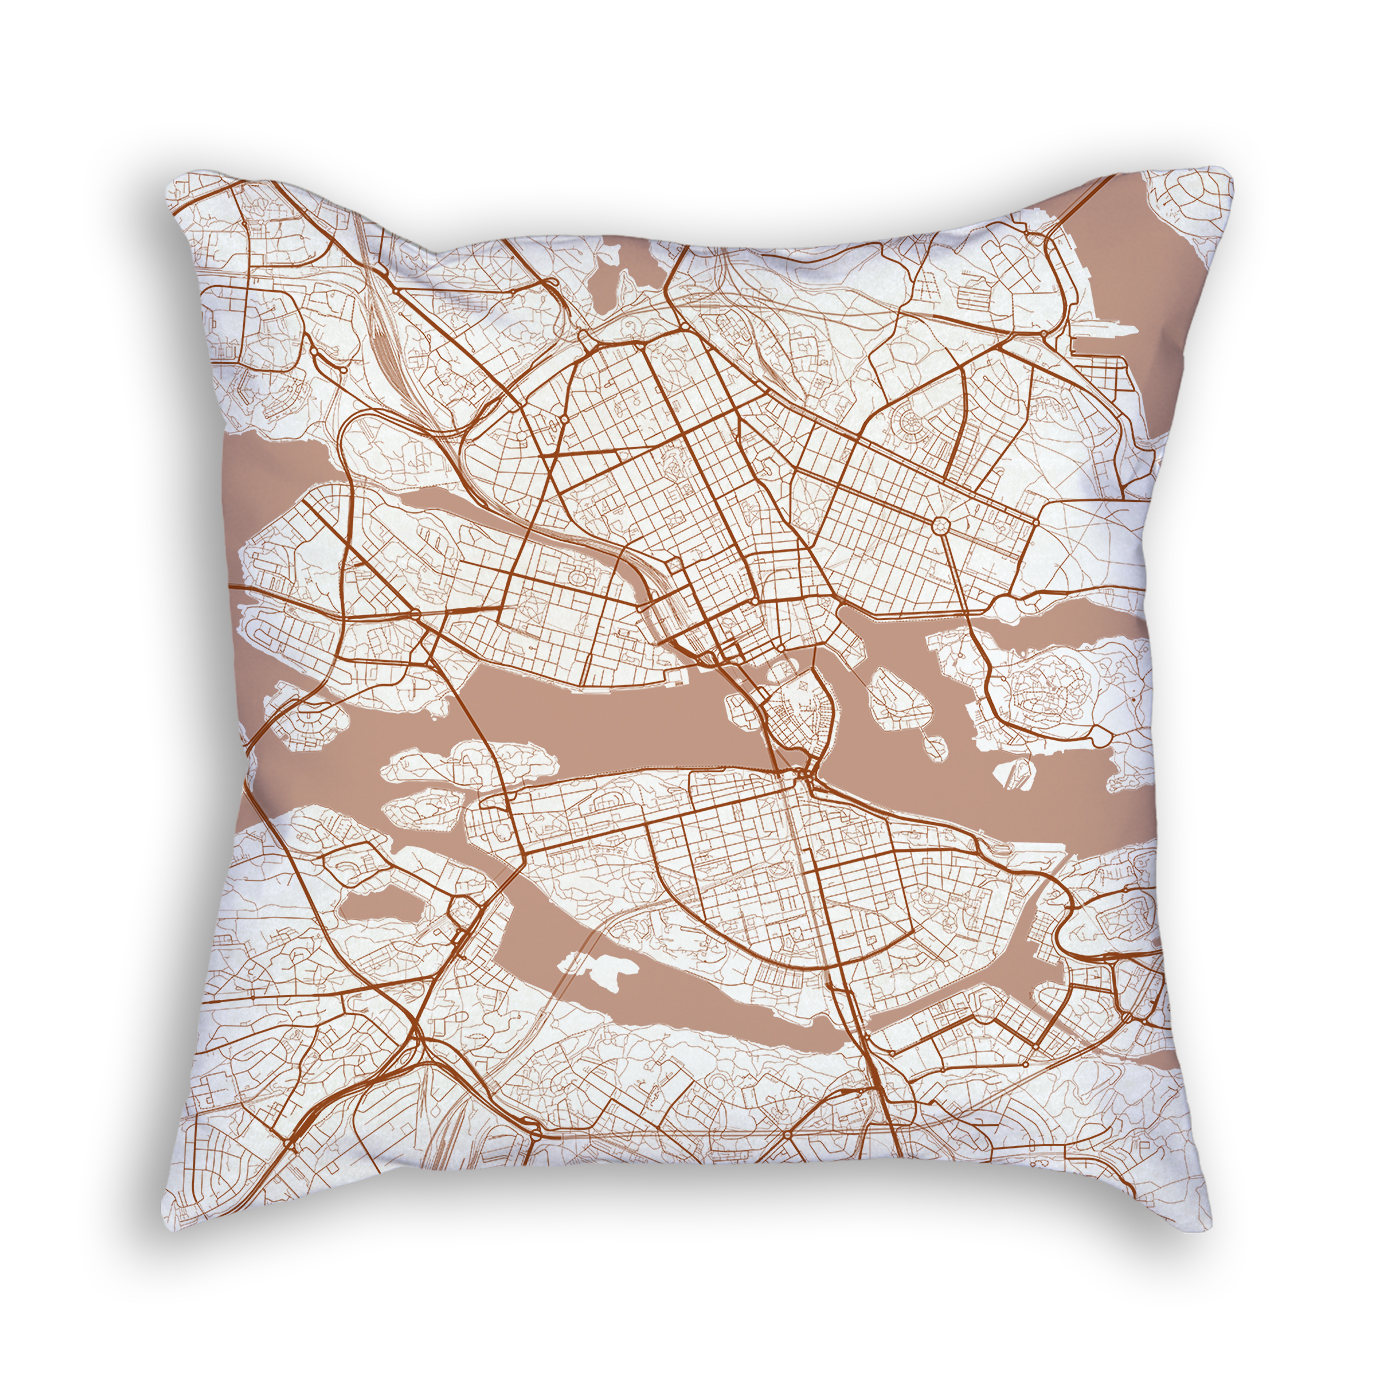 Stockholm Sweden City Map Art Decorative Throw Pillow